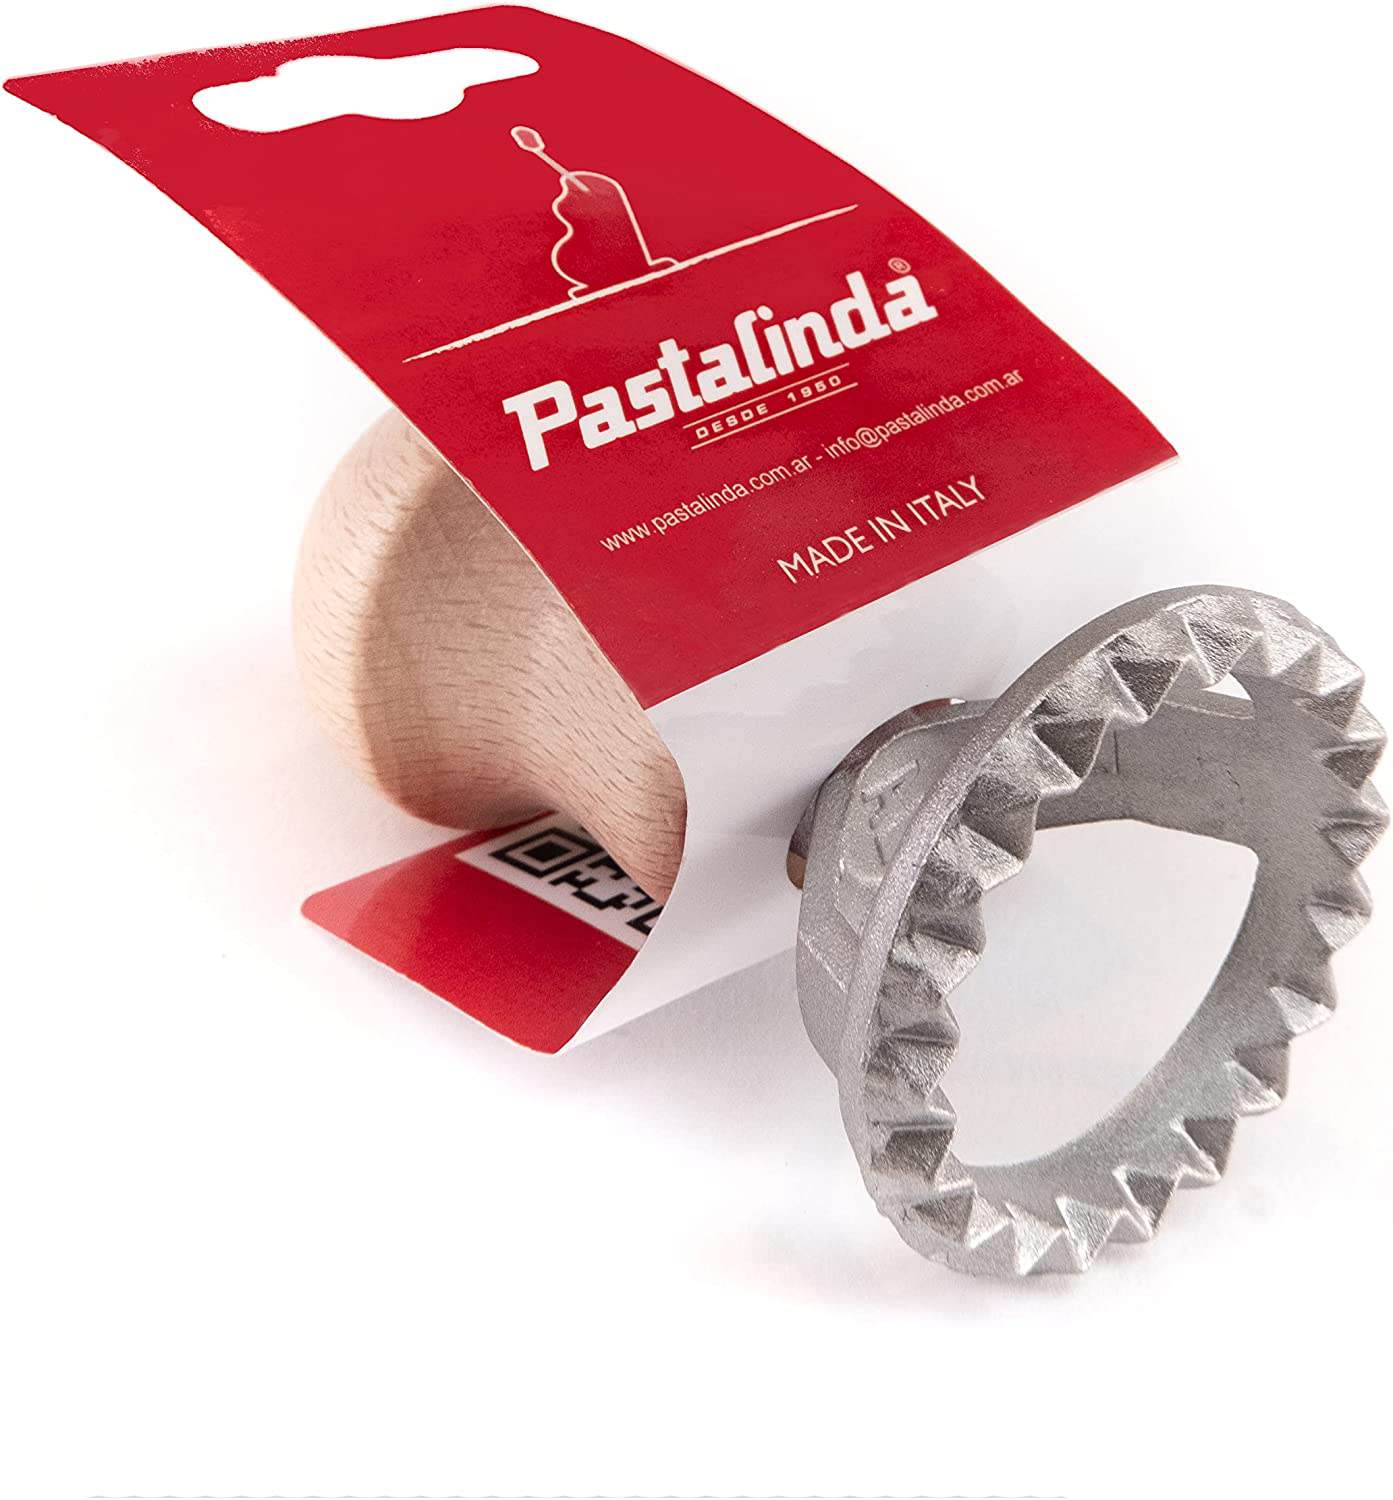 Pastalinda Aluminum Round Sorrentino Stamp, 1.57-Inch - Pastalinda